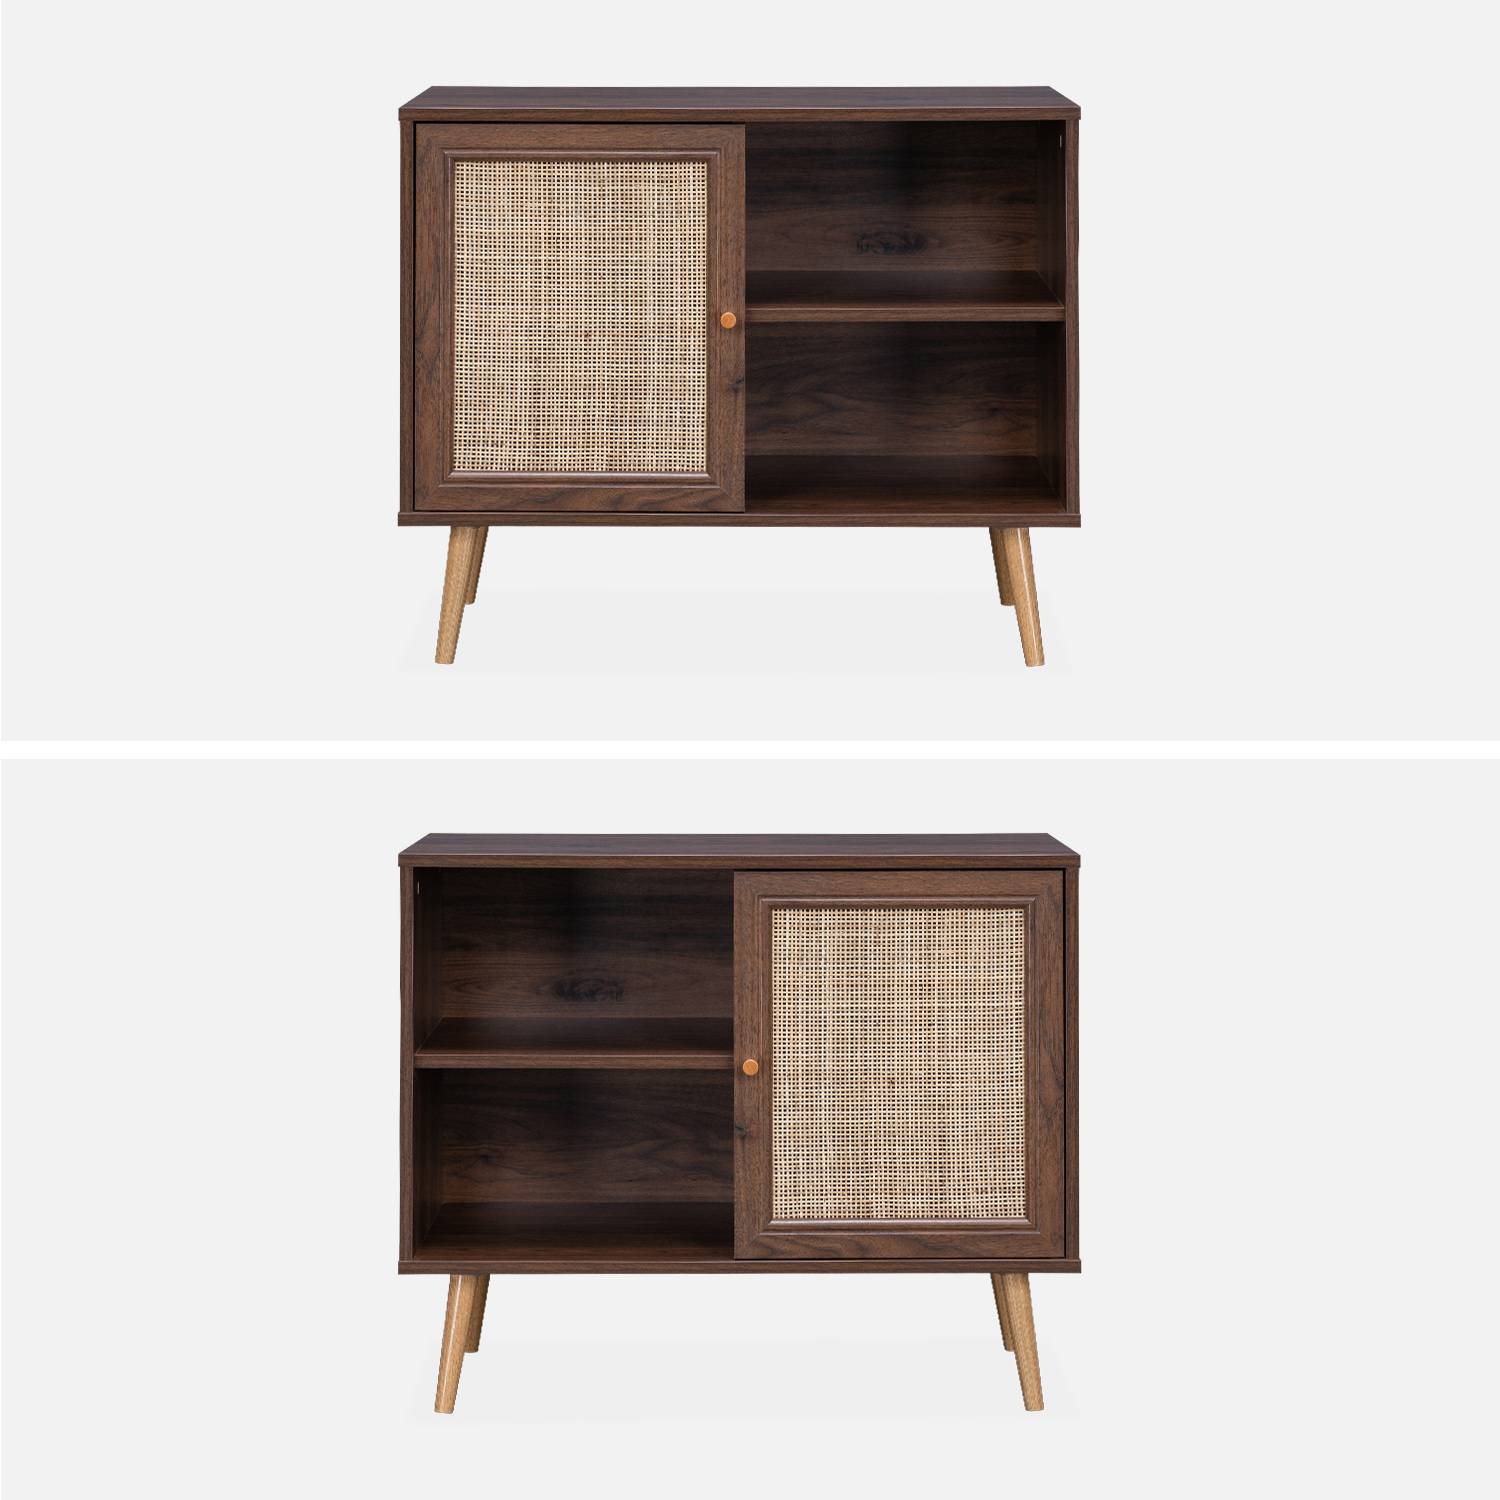 Wooden and cane rattan detail storage cabinet with 2 shelves, 1 cupboard, Scandi-style legs, 80x39x65.8cm - Boheme - Dark wood colour,sweeek,Photo3